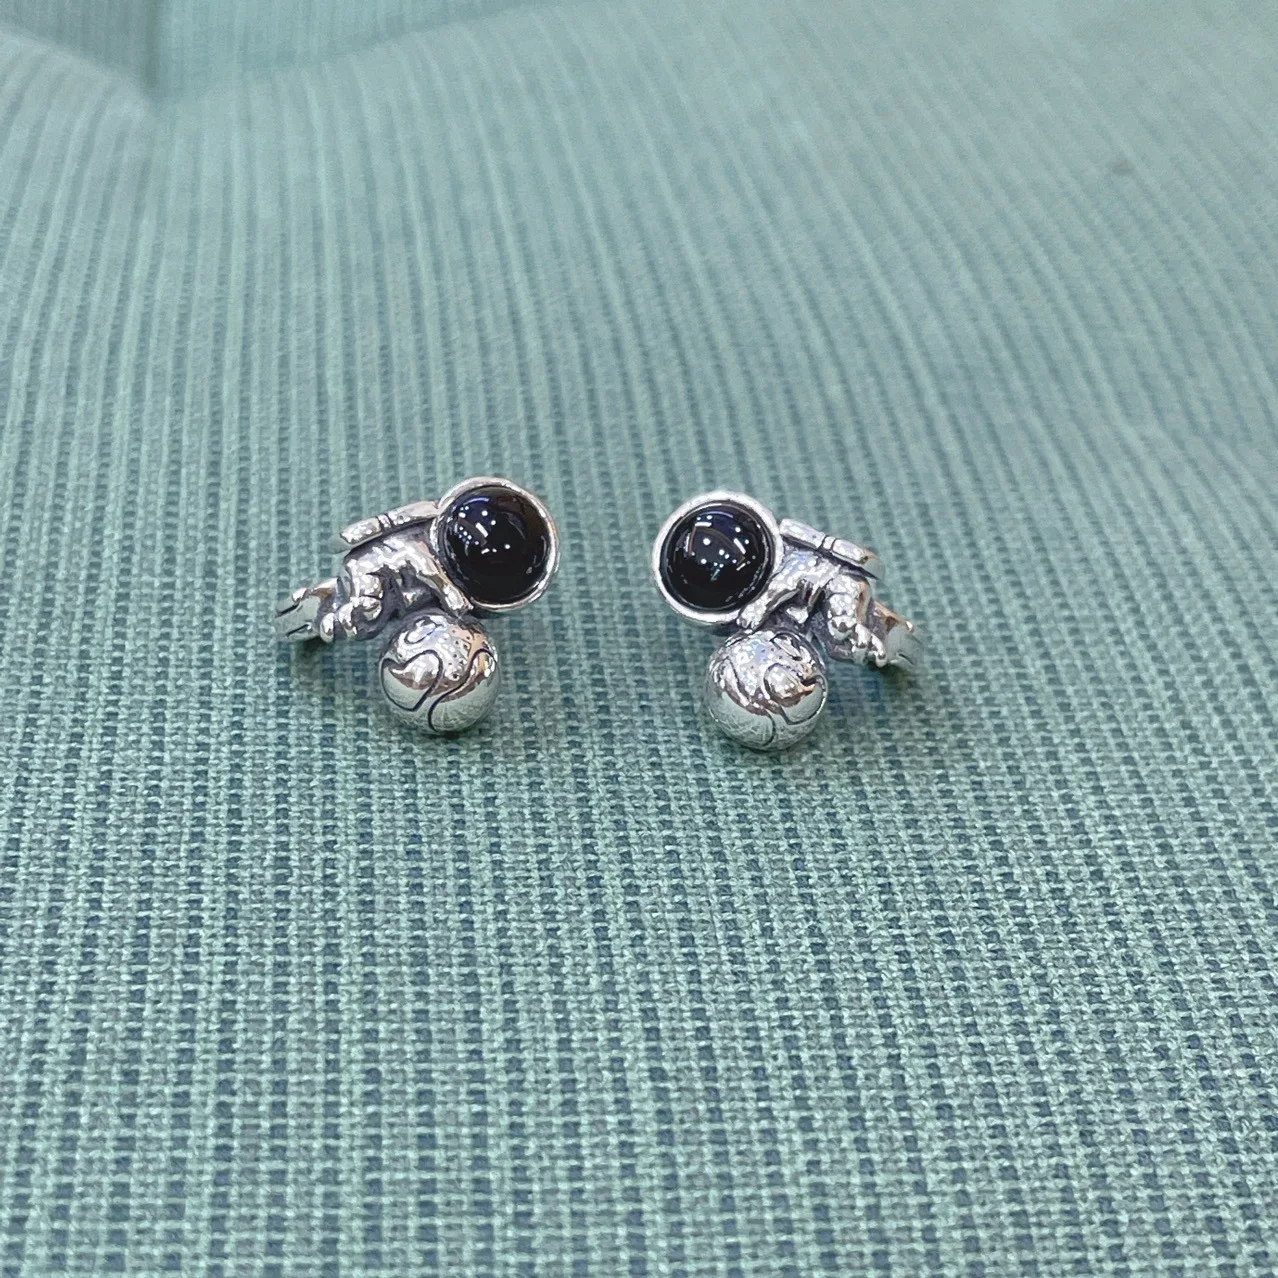 Pure 925 Sterling Silver Black Agate Astronaut Moon Stud Earrings For Women Girls Fashion Create Small Ear Buckle Earrings EH060